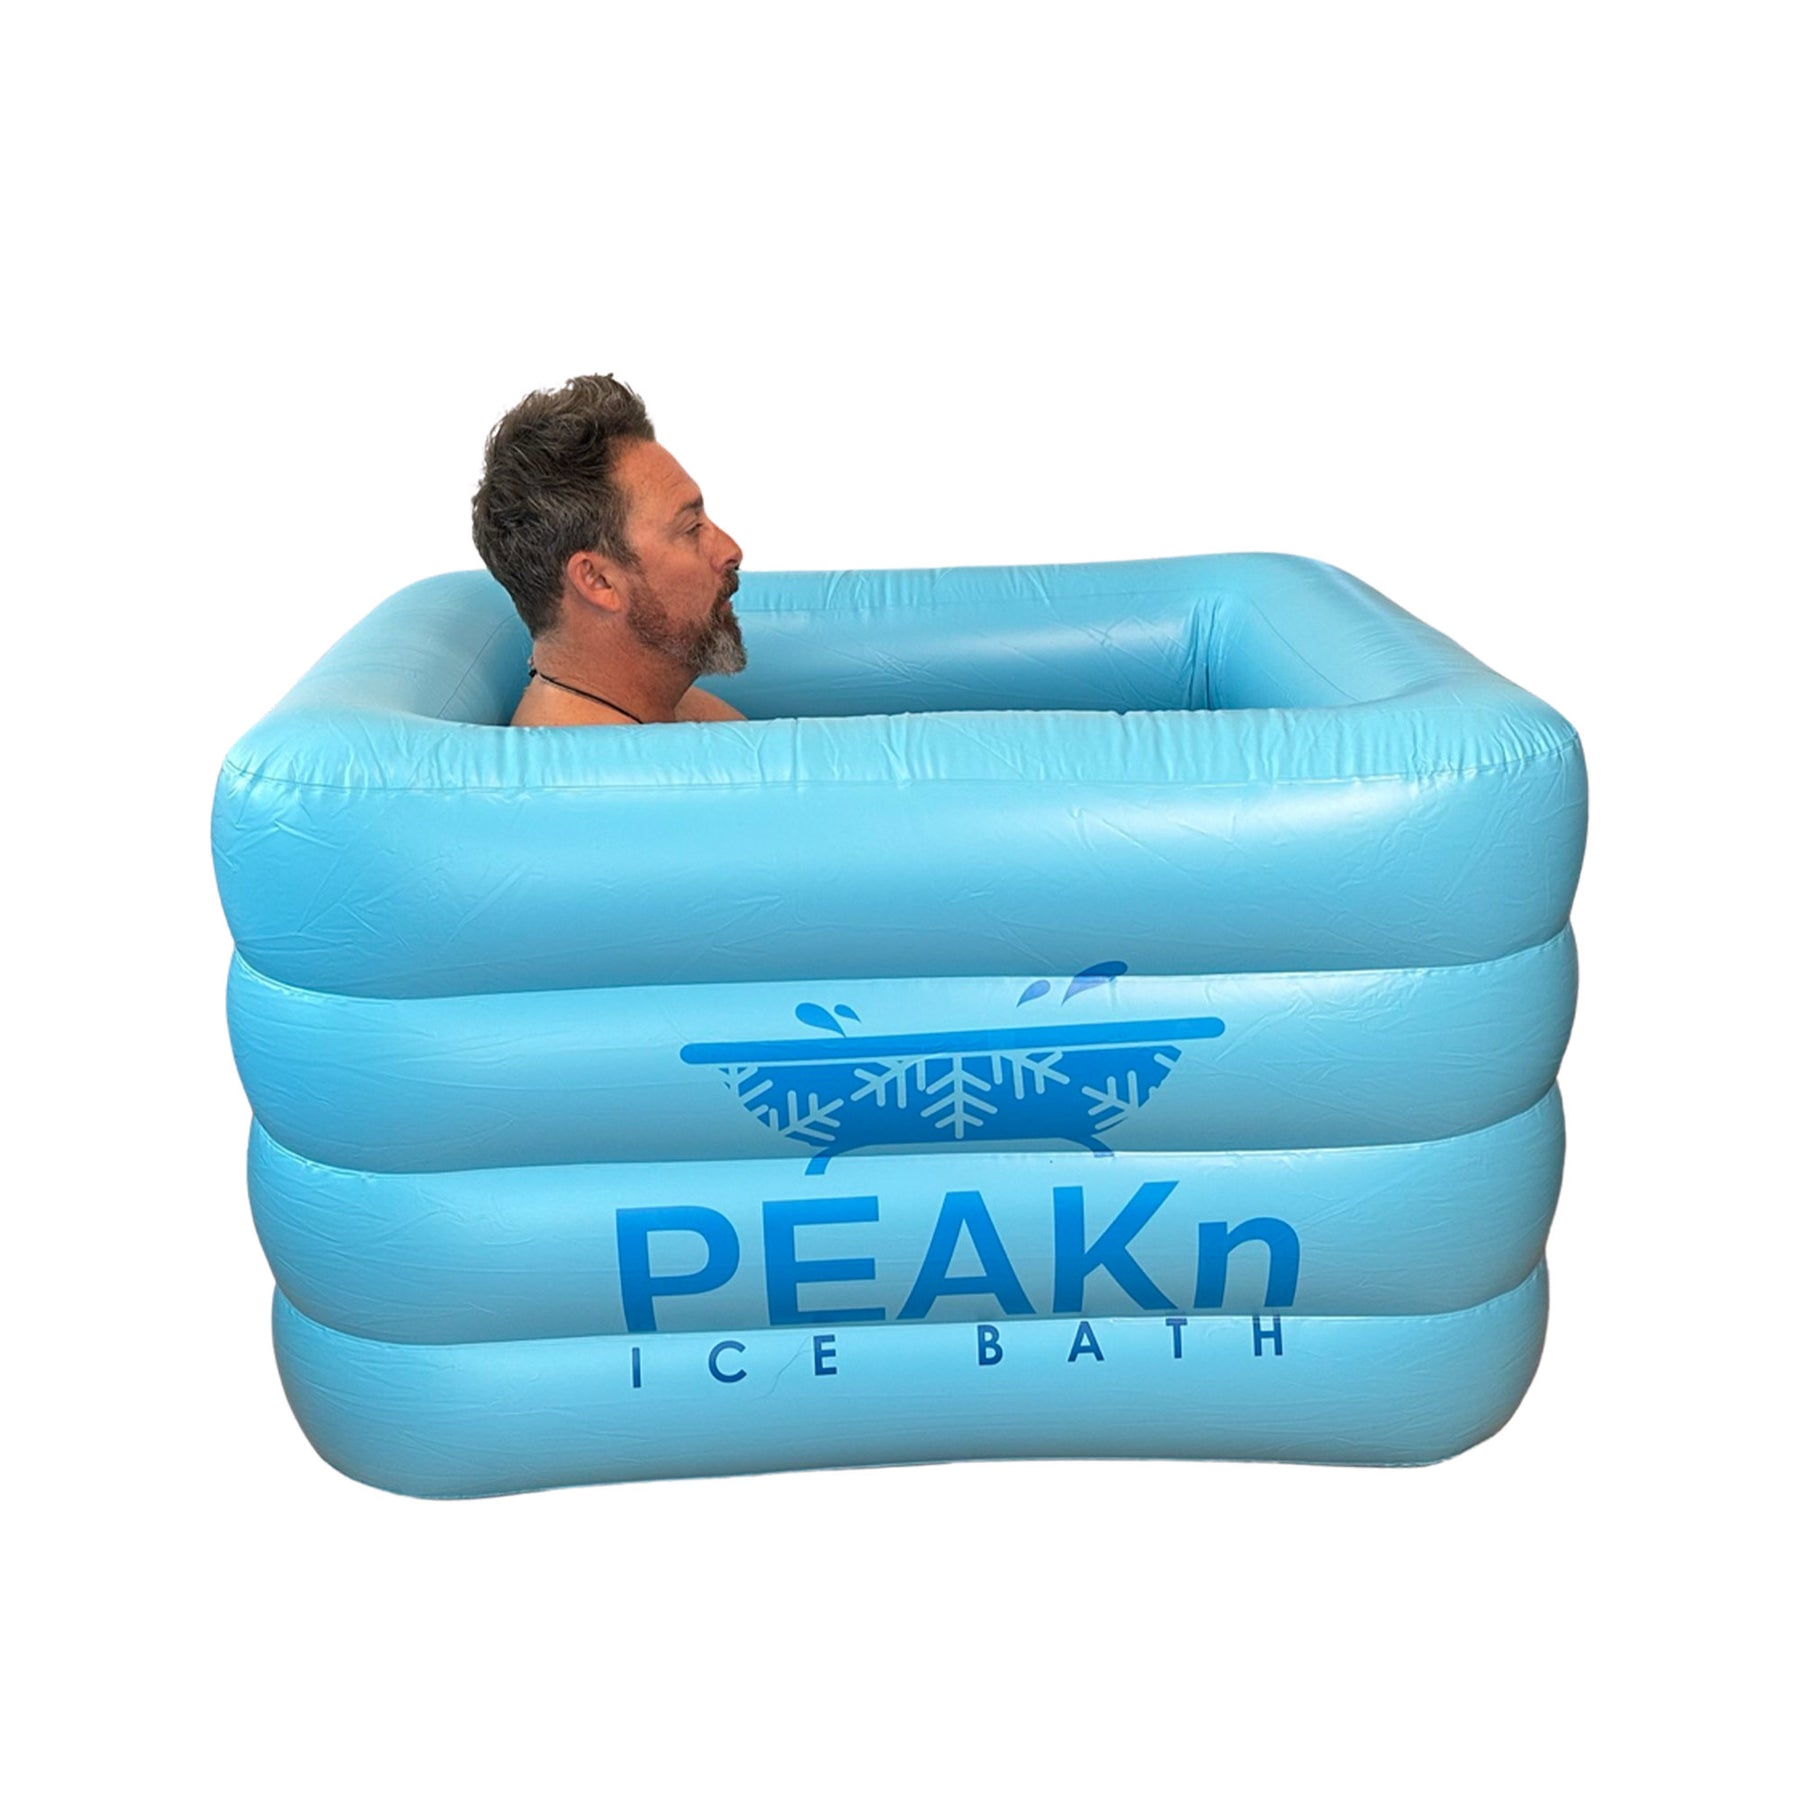 Peakn Ice Bath with model